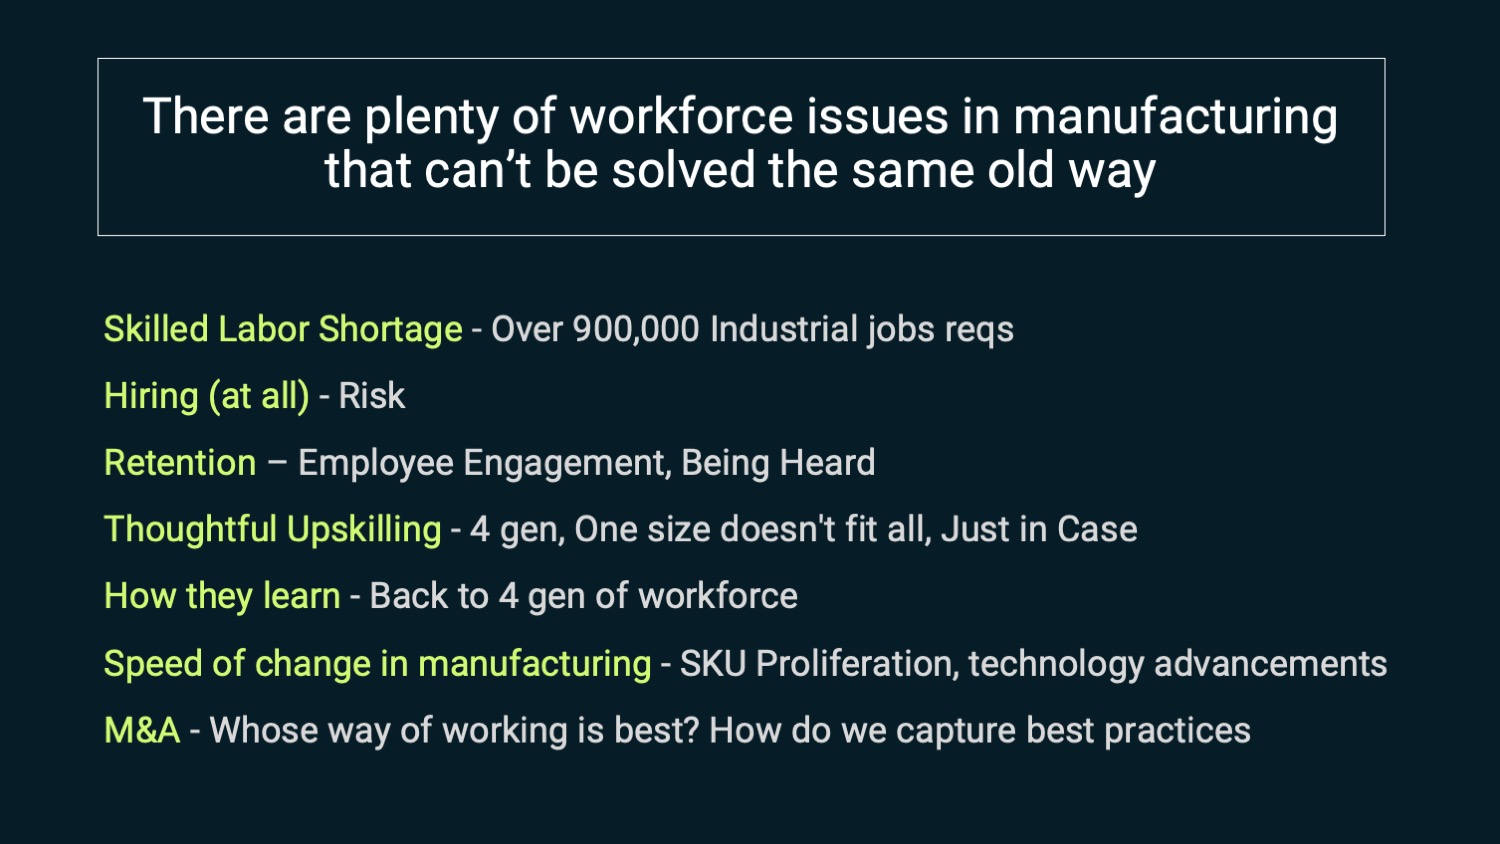 Manufacturing workforce challenges